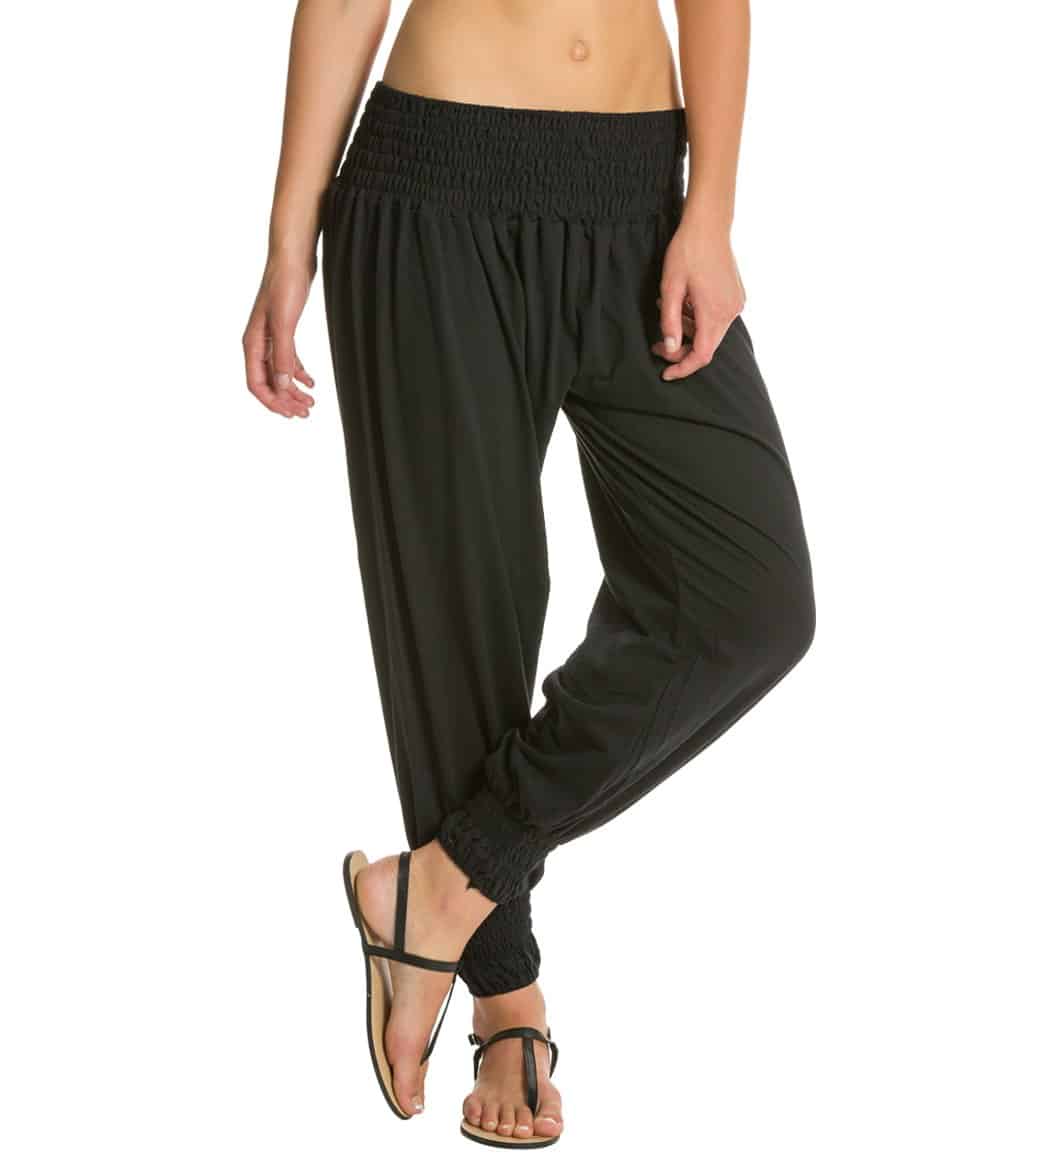 The Best Loose Fitting Yoga Pants for Women | ComfortNerd